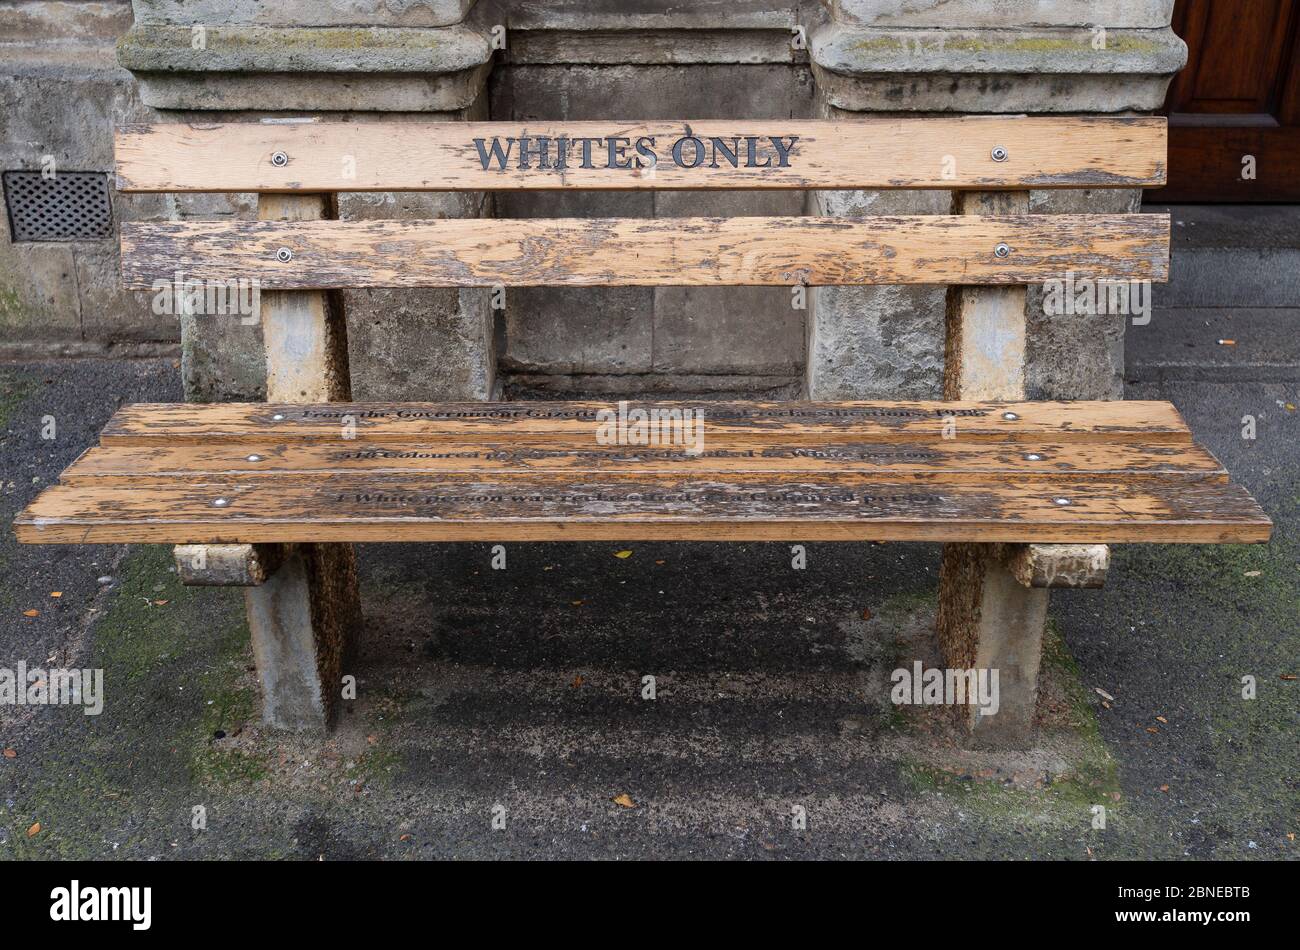 Whites only Apartheid era bench, Cape Town, South Africa Stock Photo - Alamy